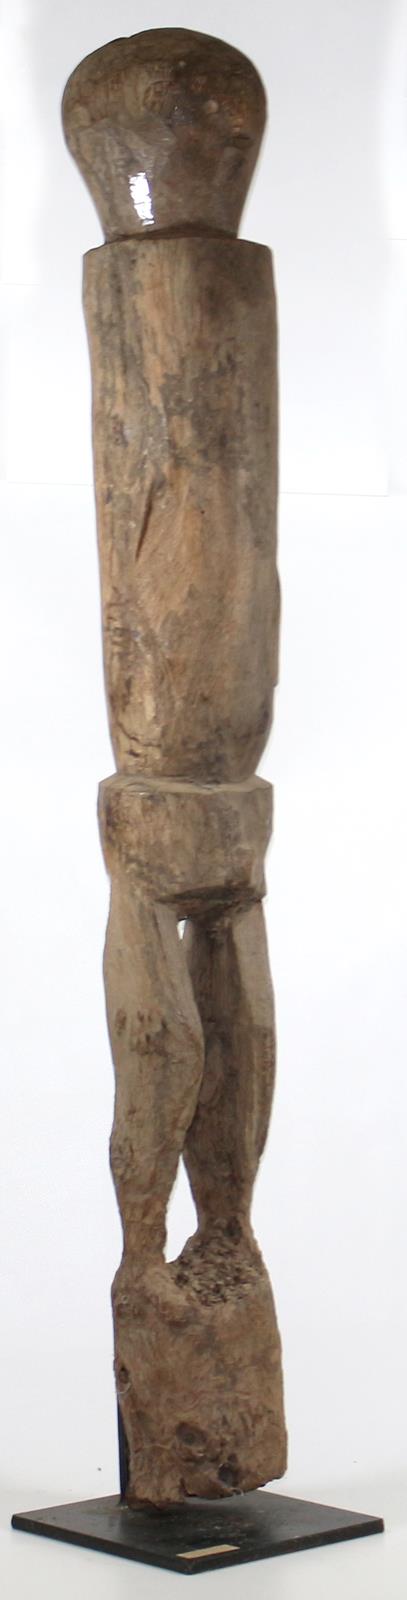 Lamba Togo Pfostenfigur. | Bild Nr.2